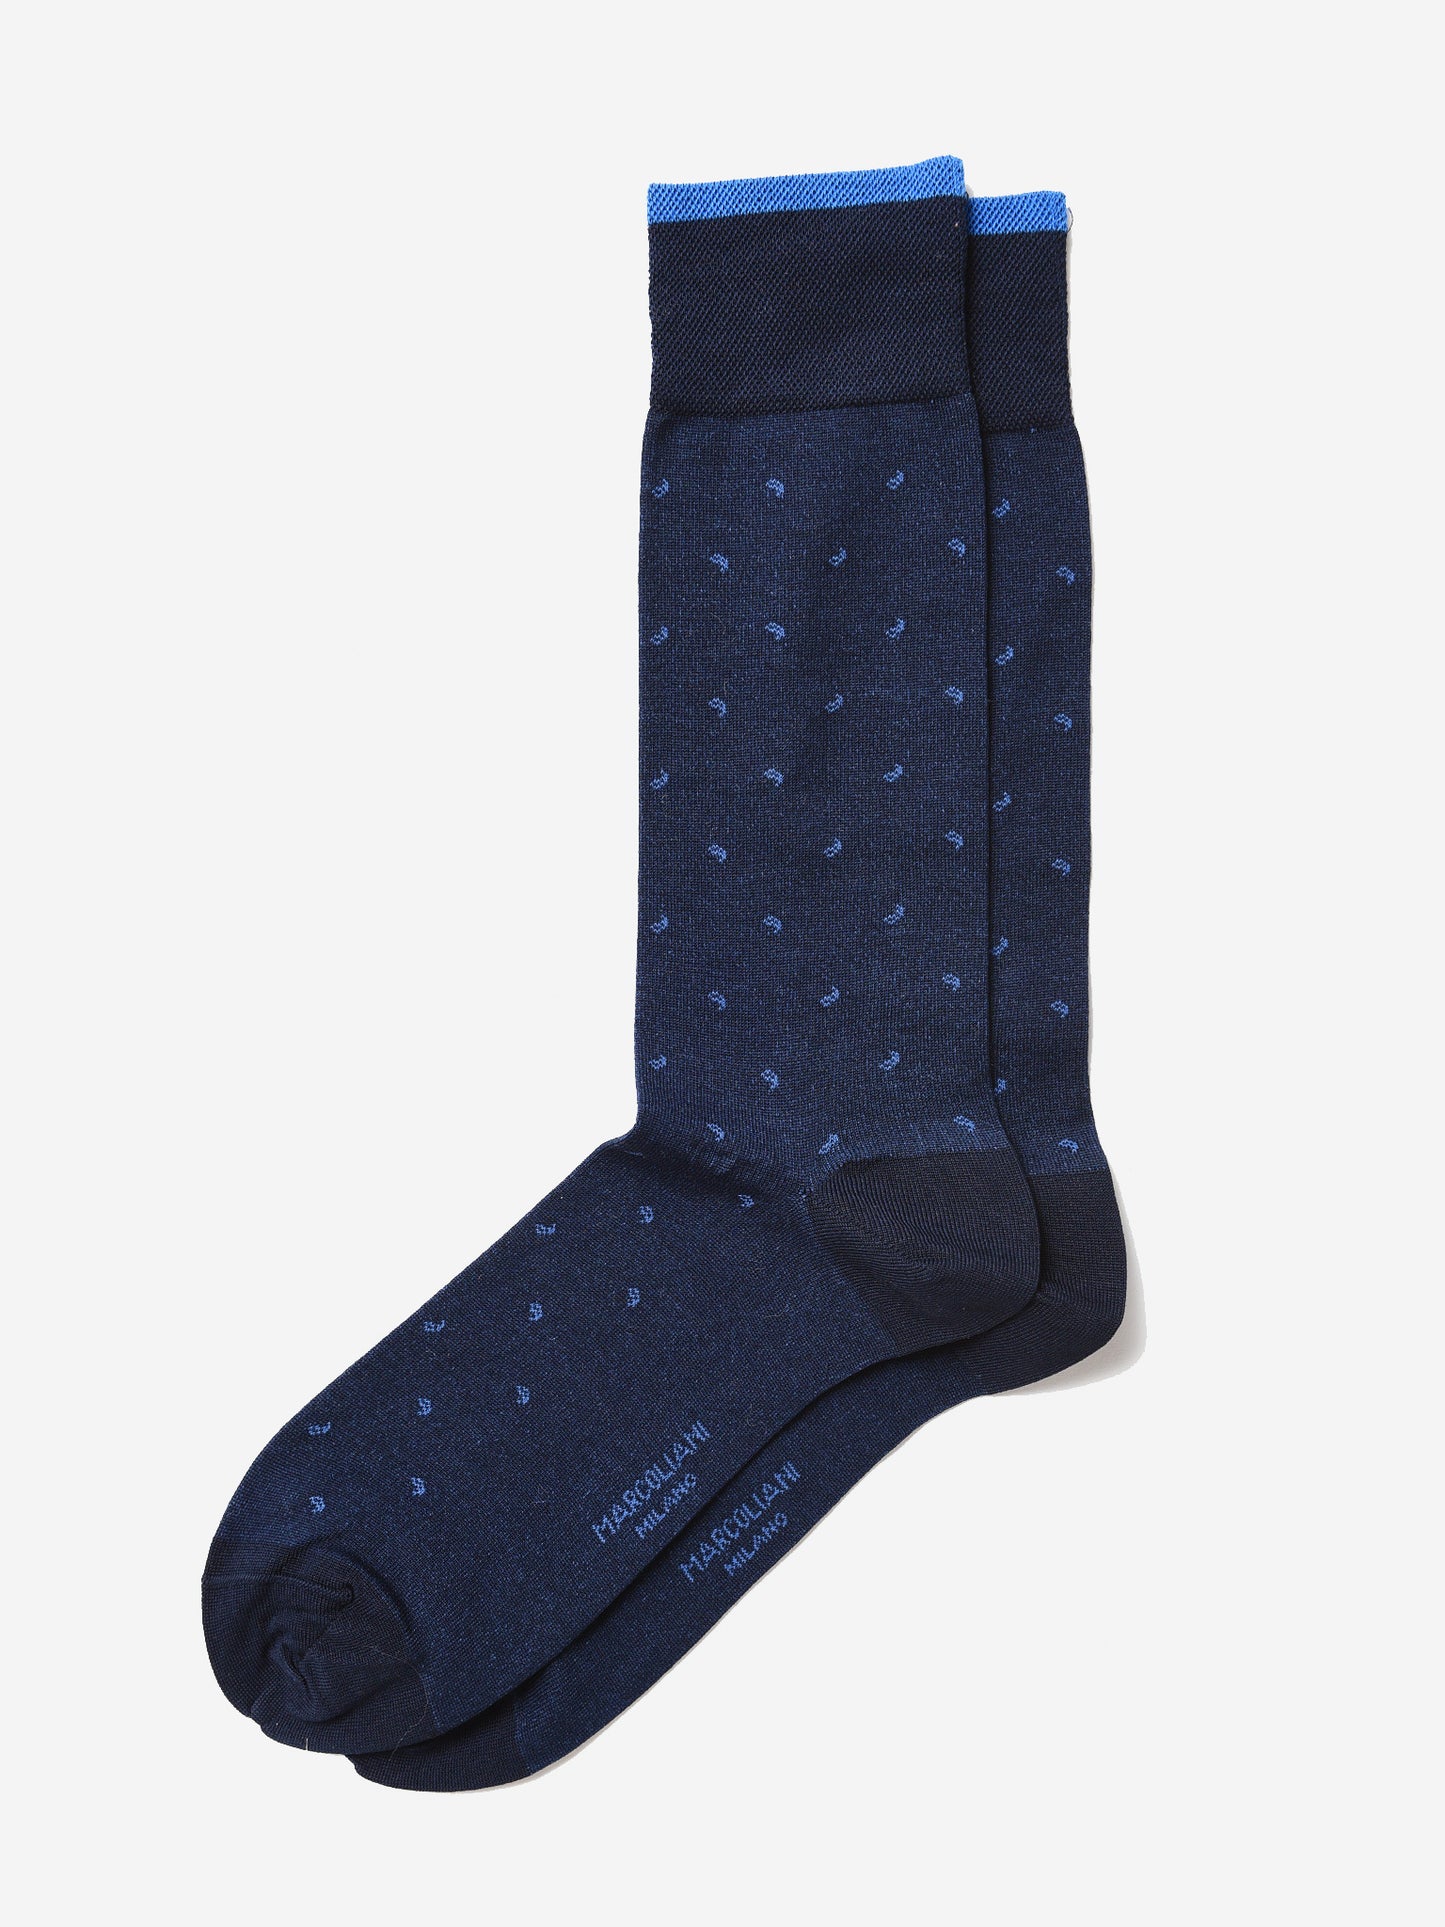 Marcoliani Men's Micro-Paisley Dress Sock